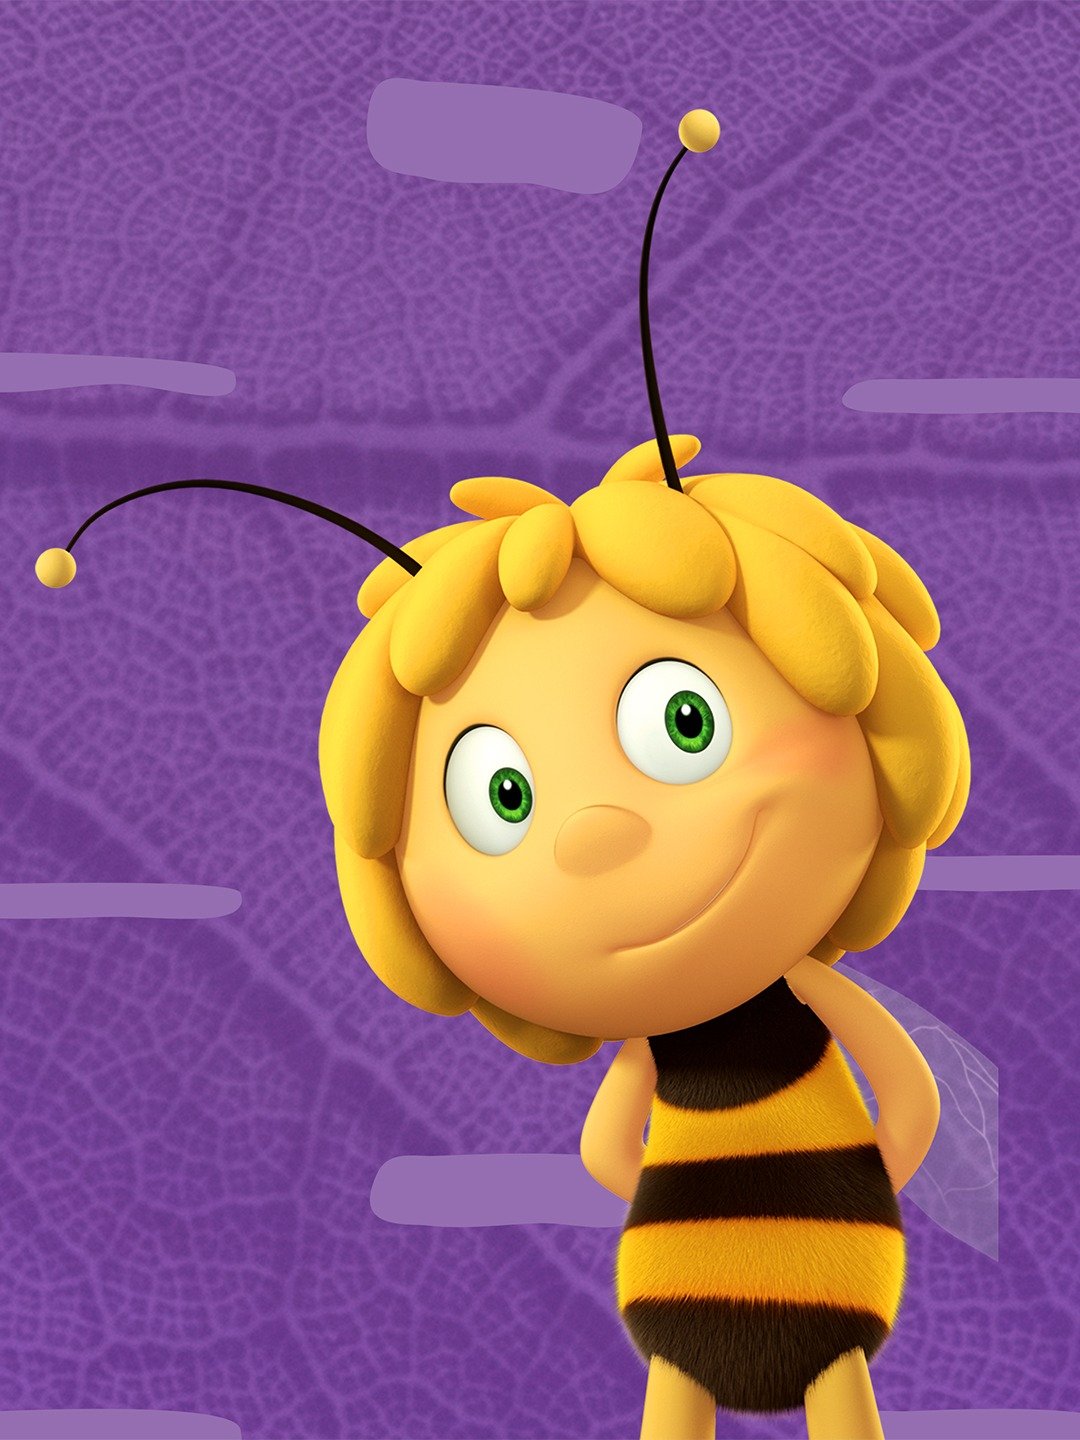 Maya the Bee - Rotten Tomatoes